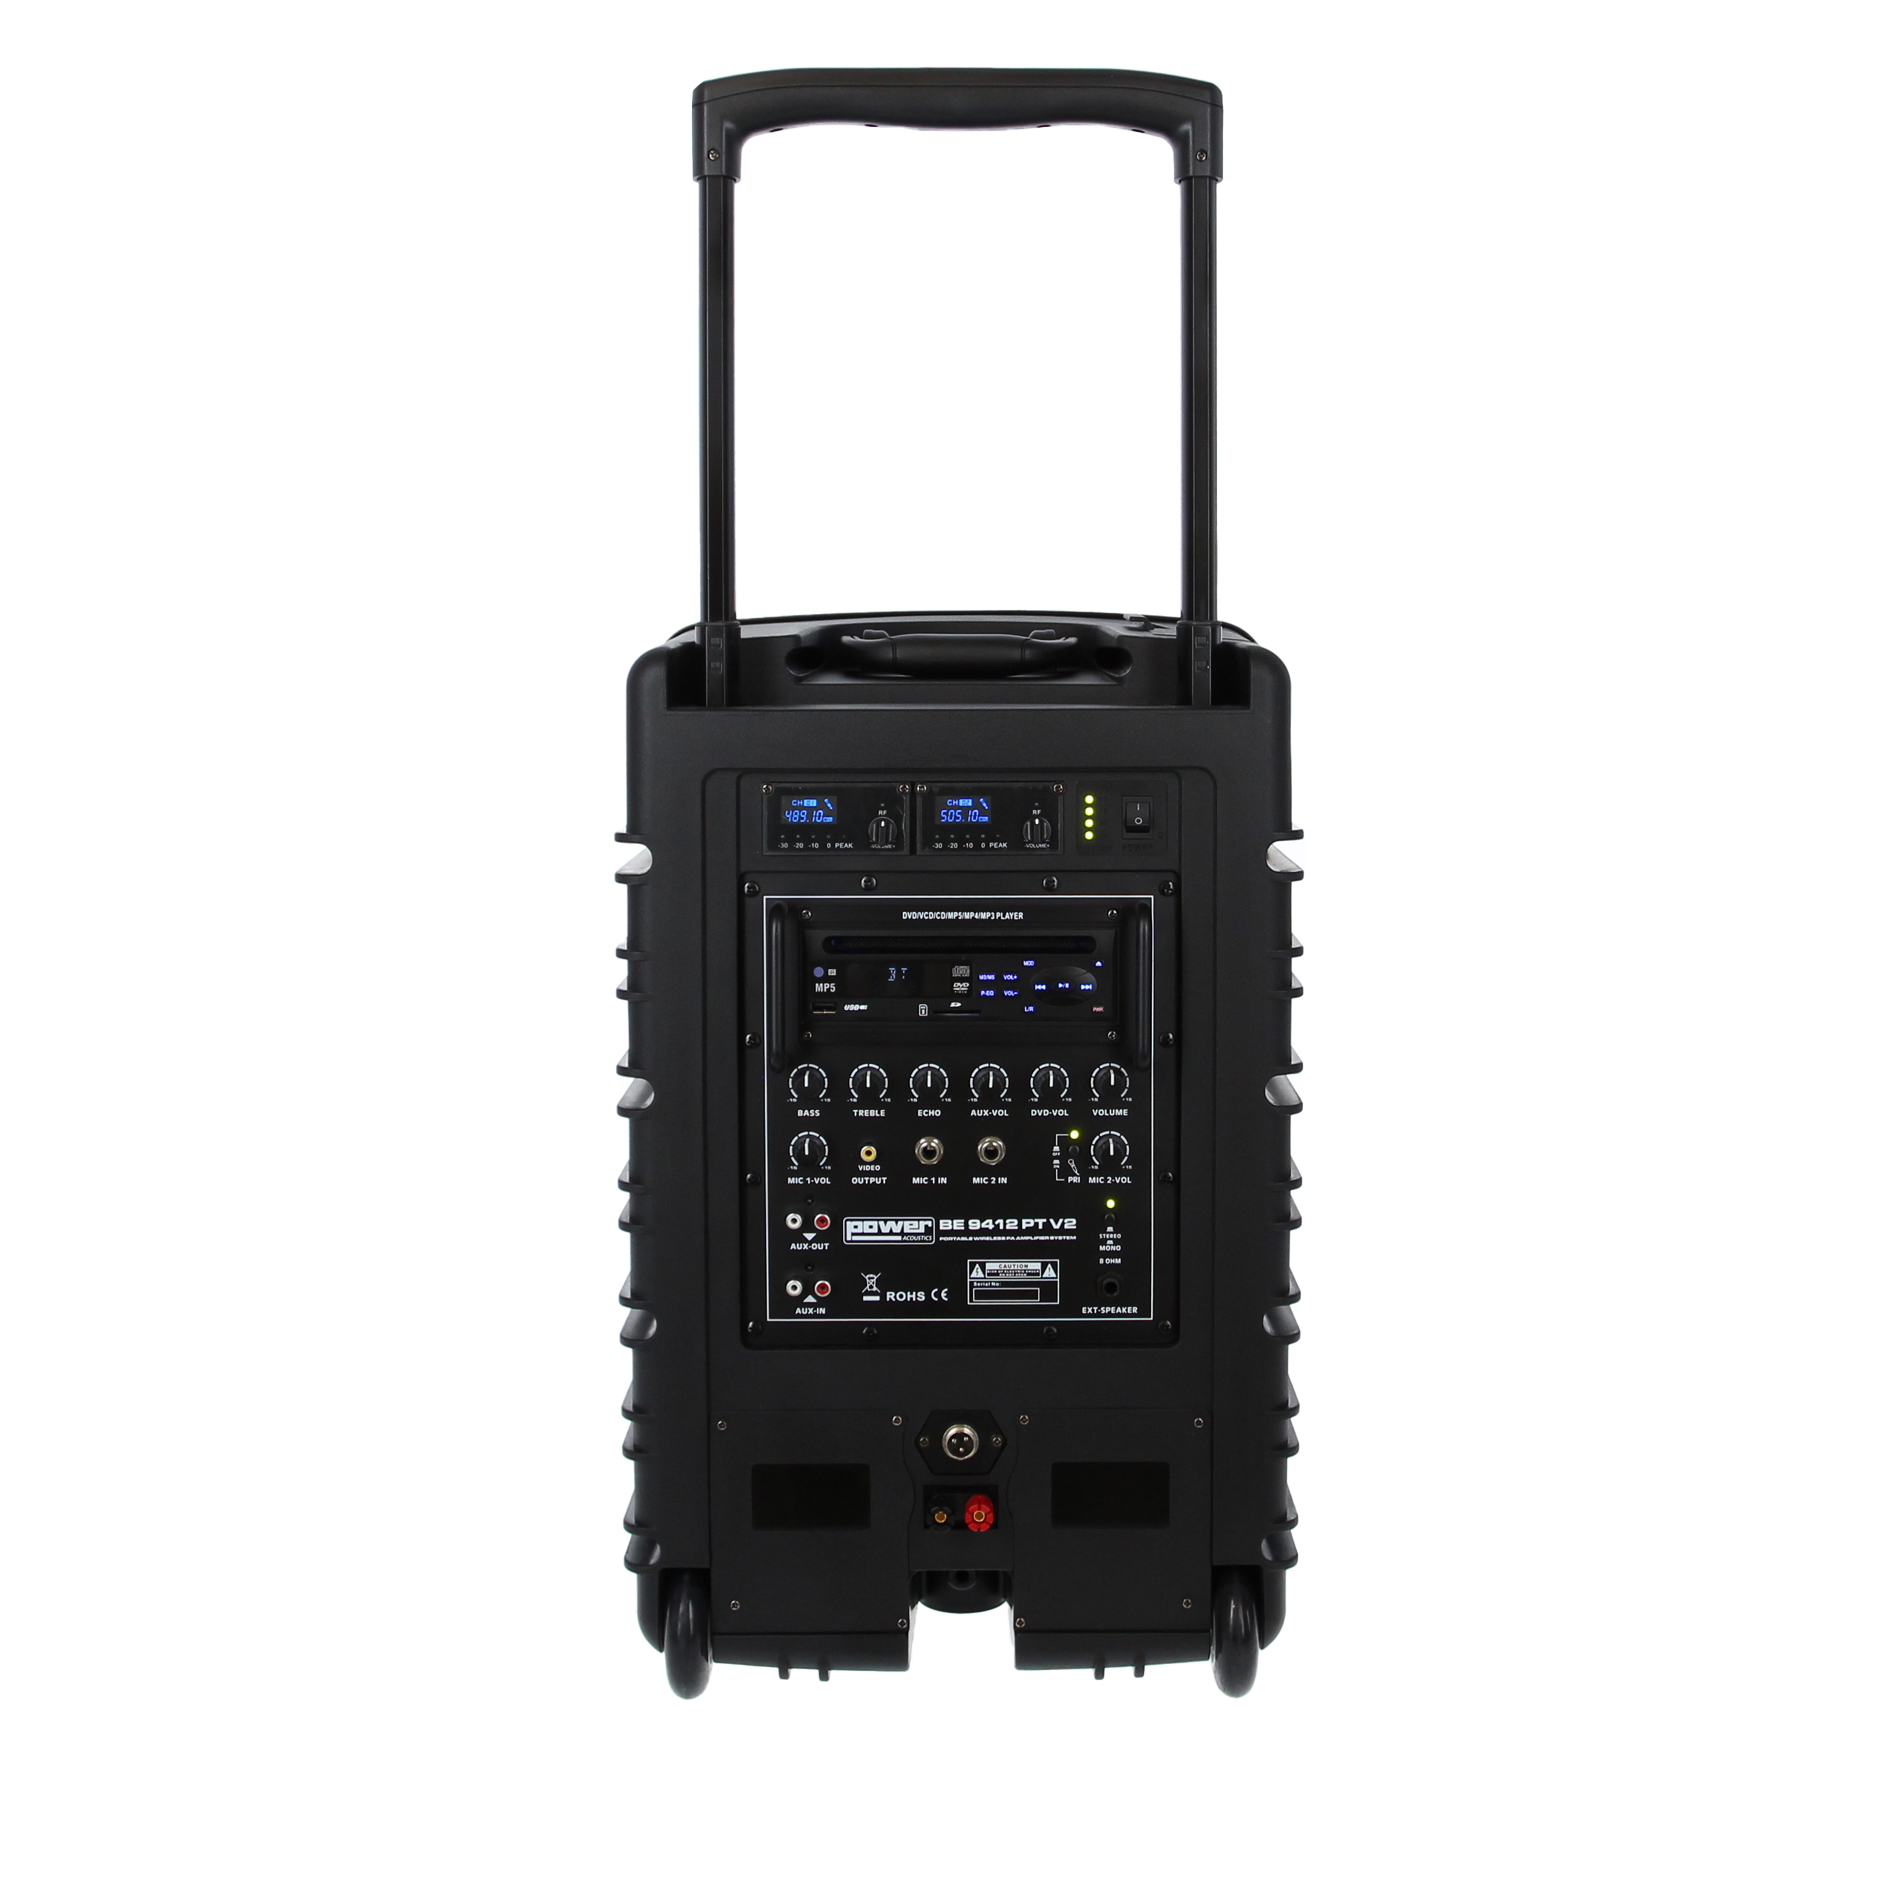 Power Acoustics Be 9412 Pt V2 - Sono Portable - Variation 3